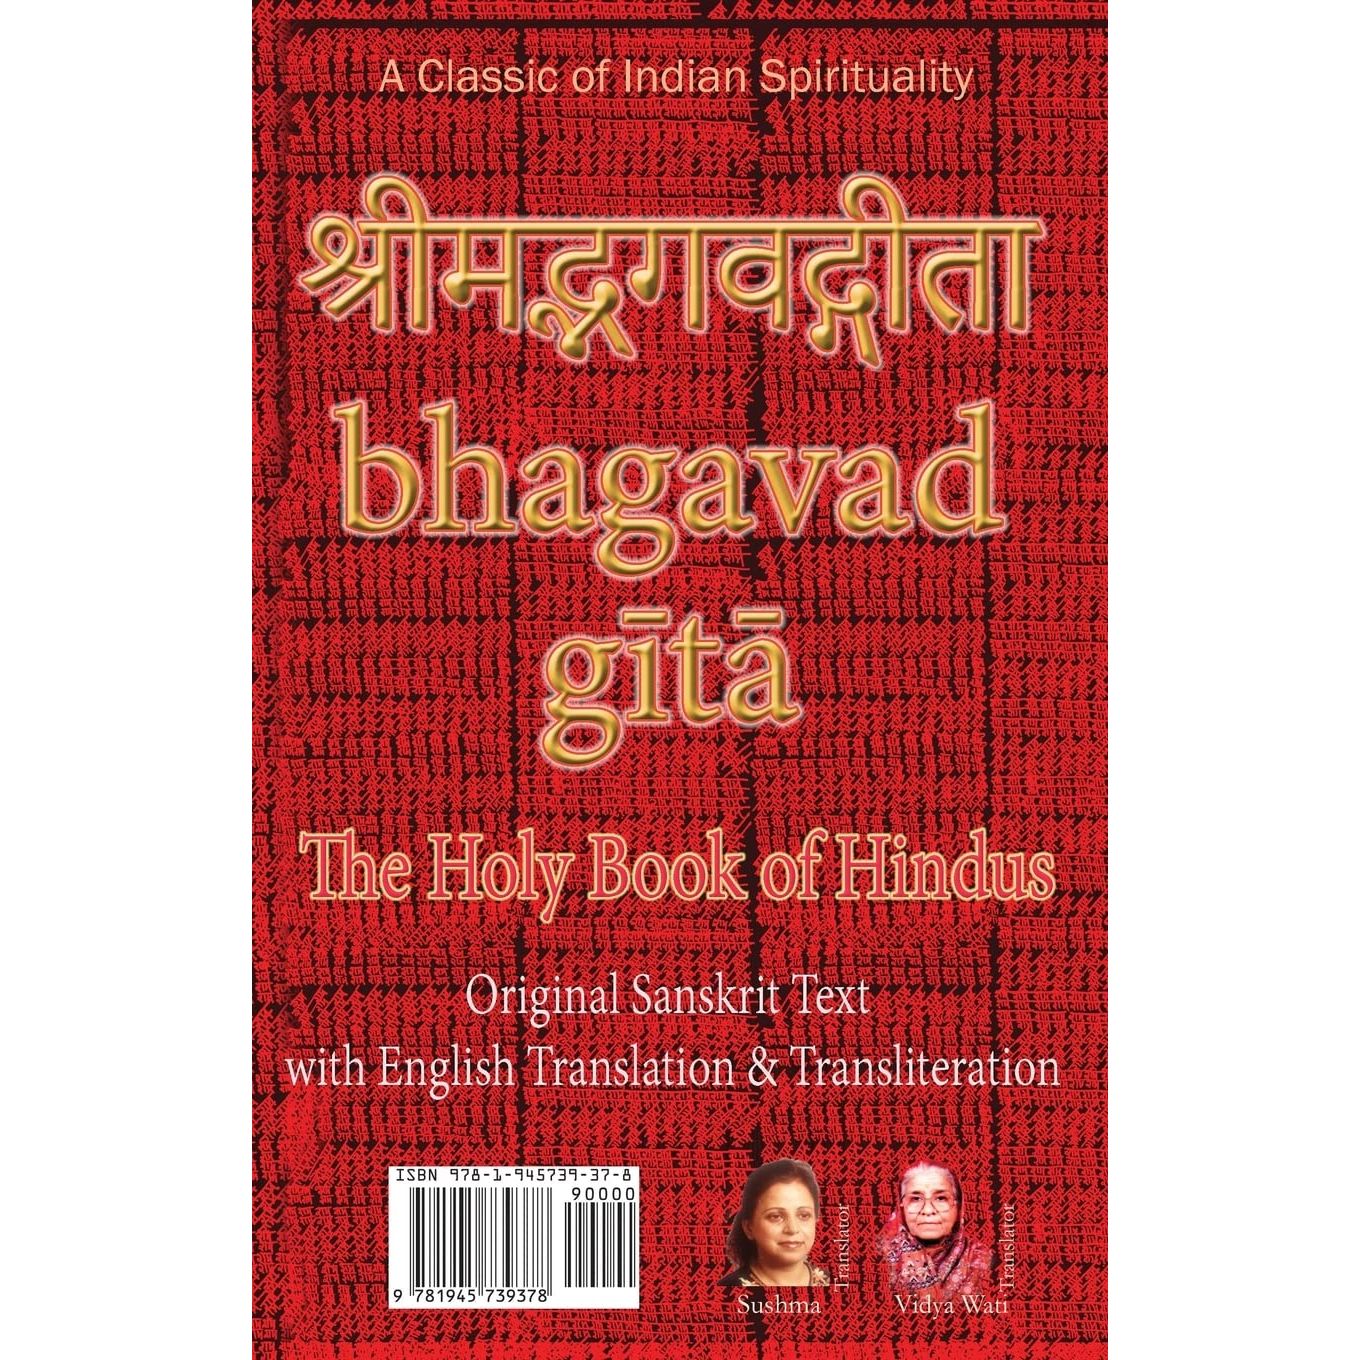 Bhagavad Gita, The Holy Book of Hindus: Original Sanskrit Text with English Translation & Transliteration ~ A Classic of Indian Spirituality